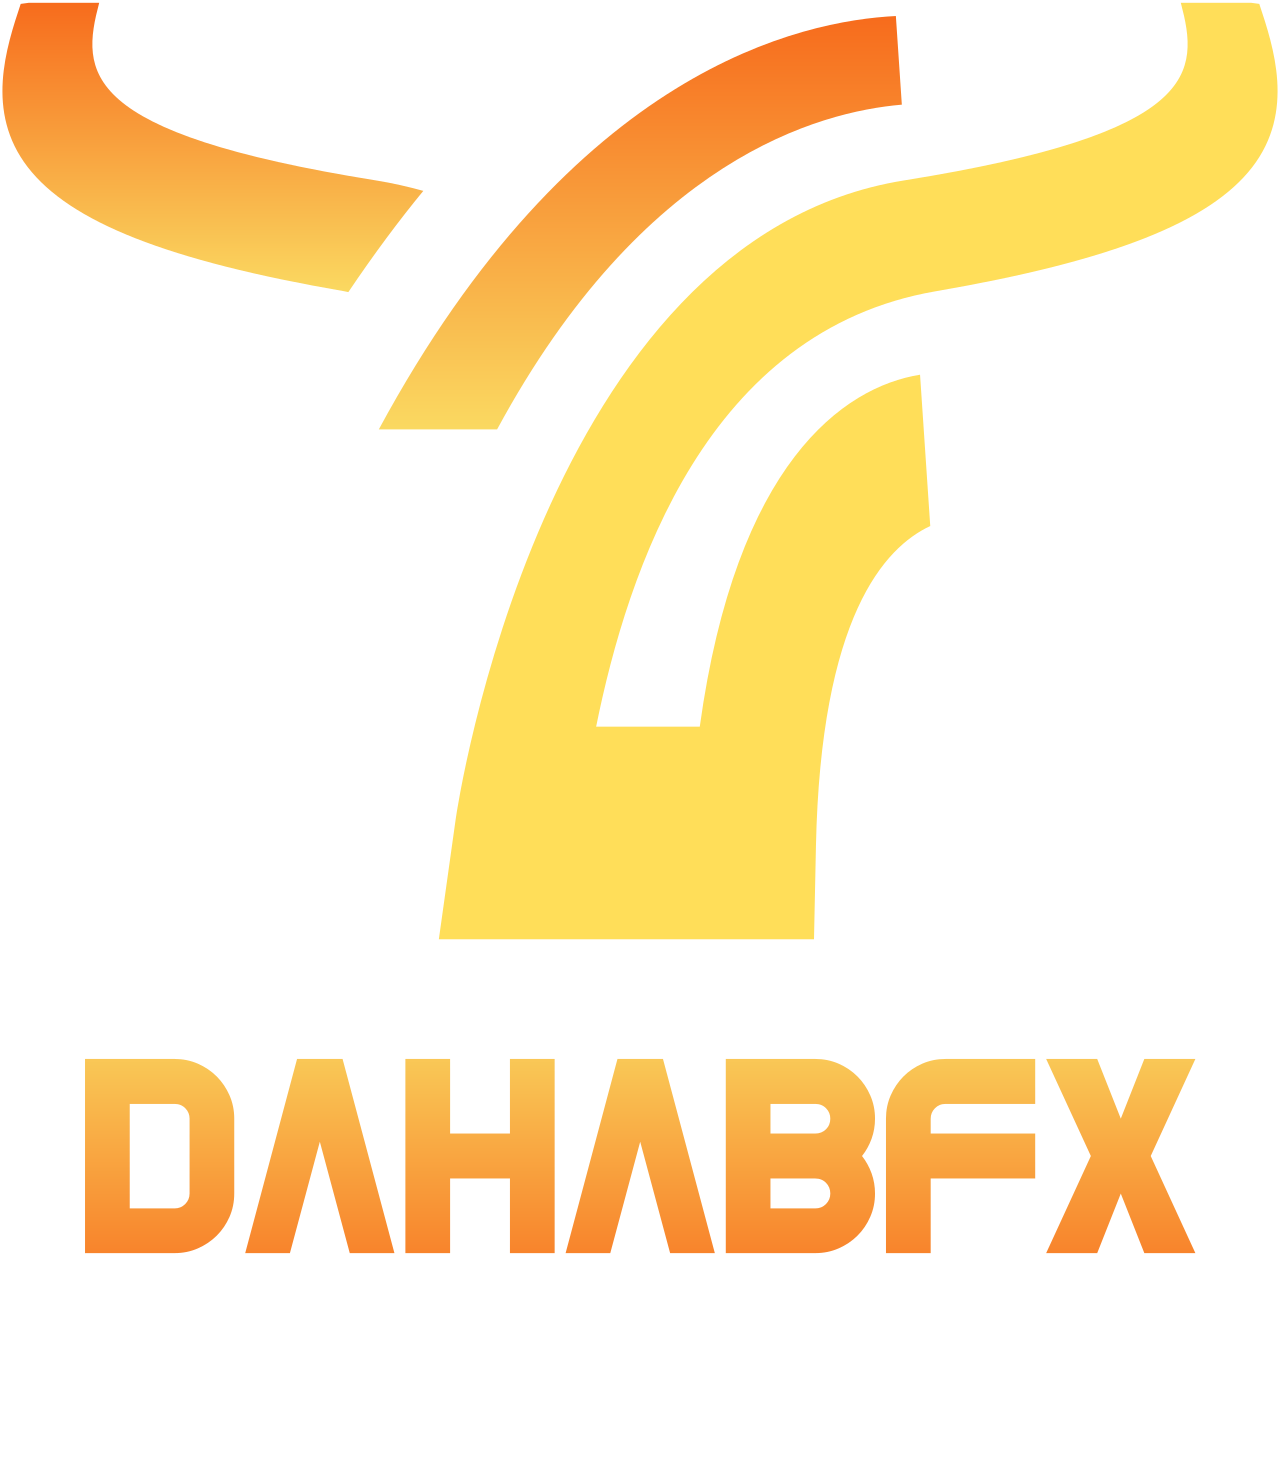 DAHABFX 's web page